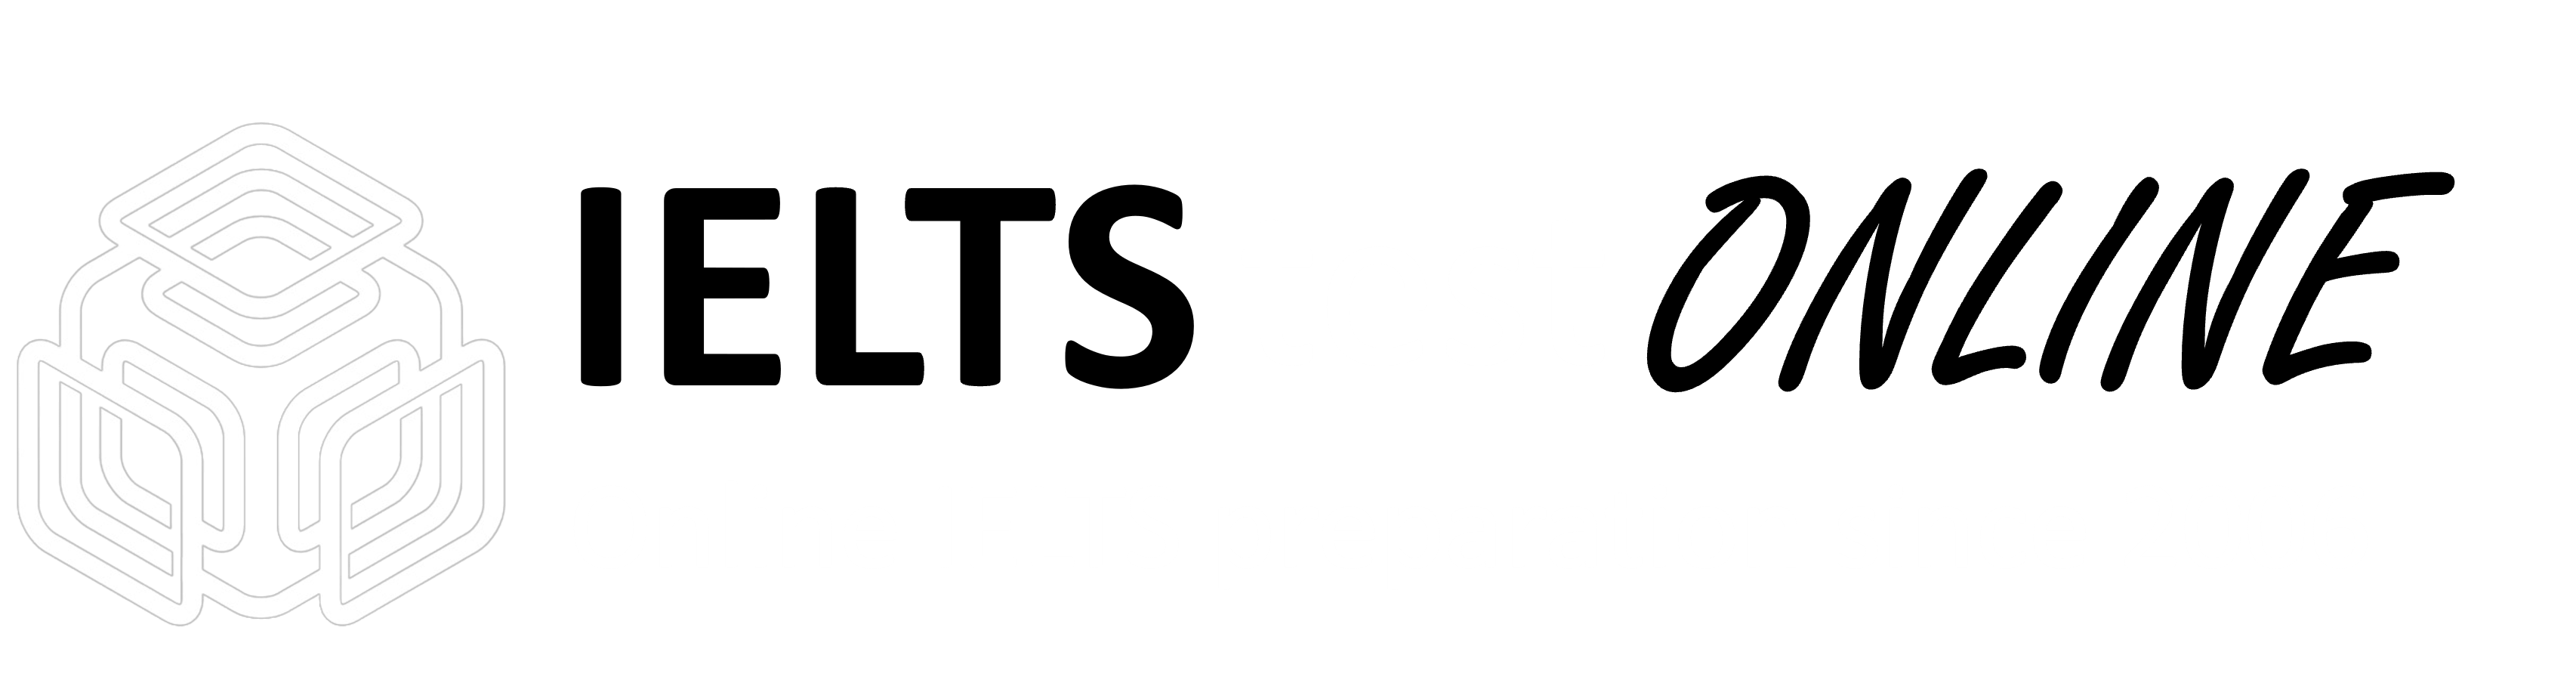 Online IELTS preparation